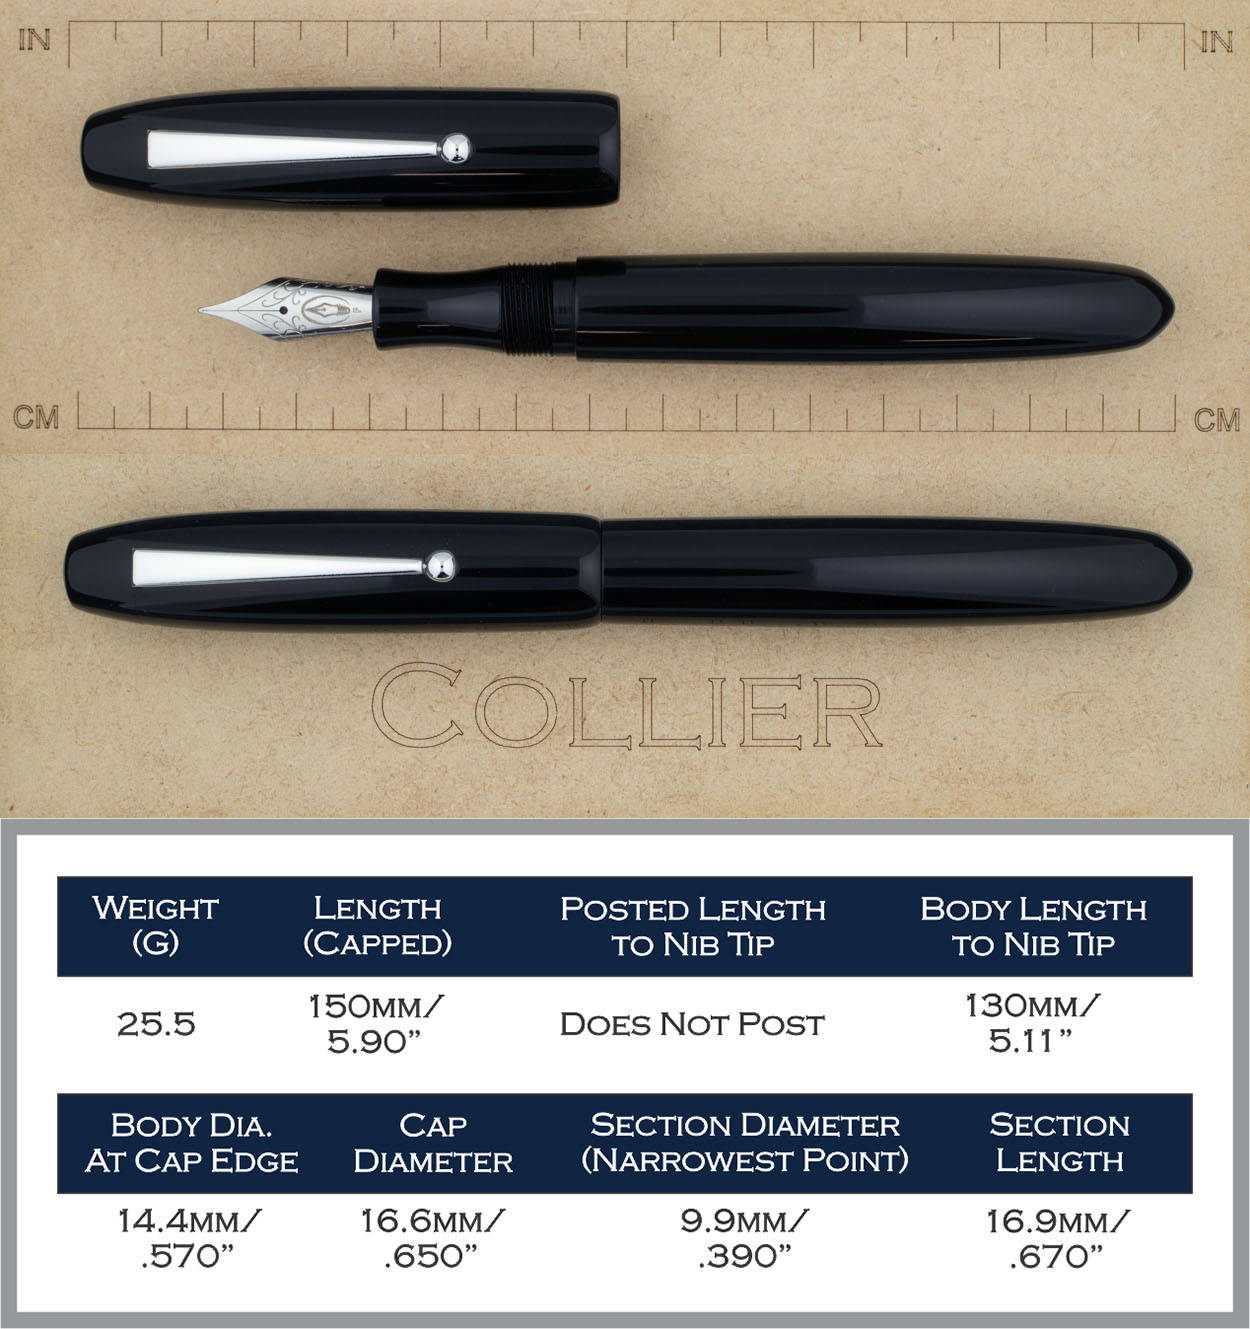 The Collier - Edison Pen Co